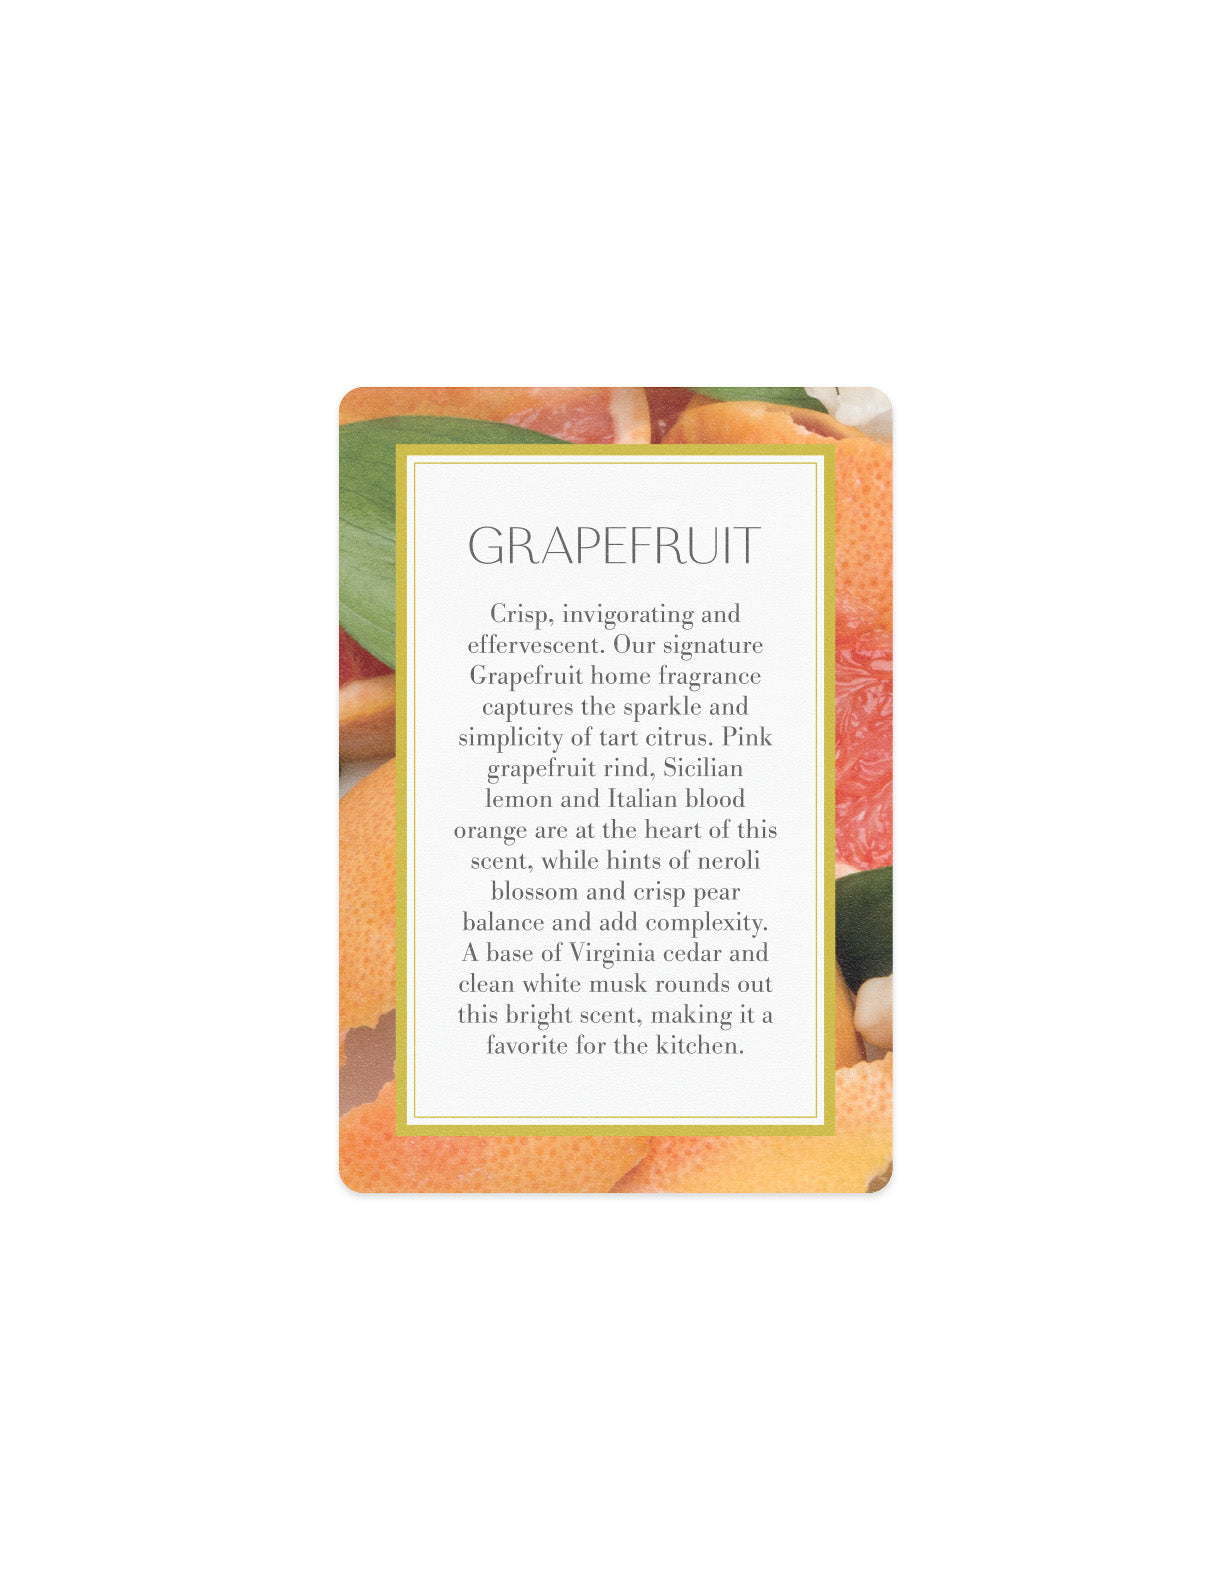 Scented Card - Grapefruit